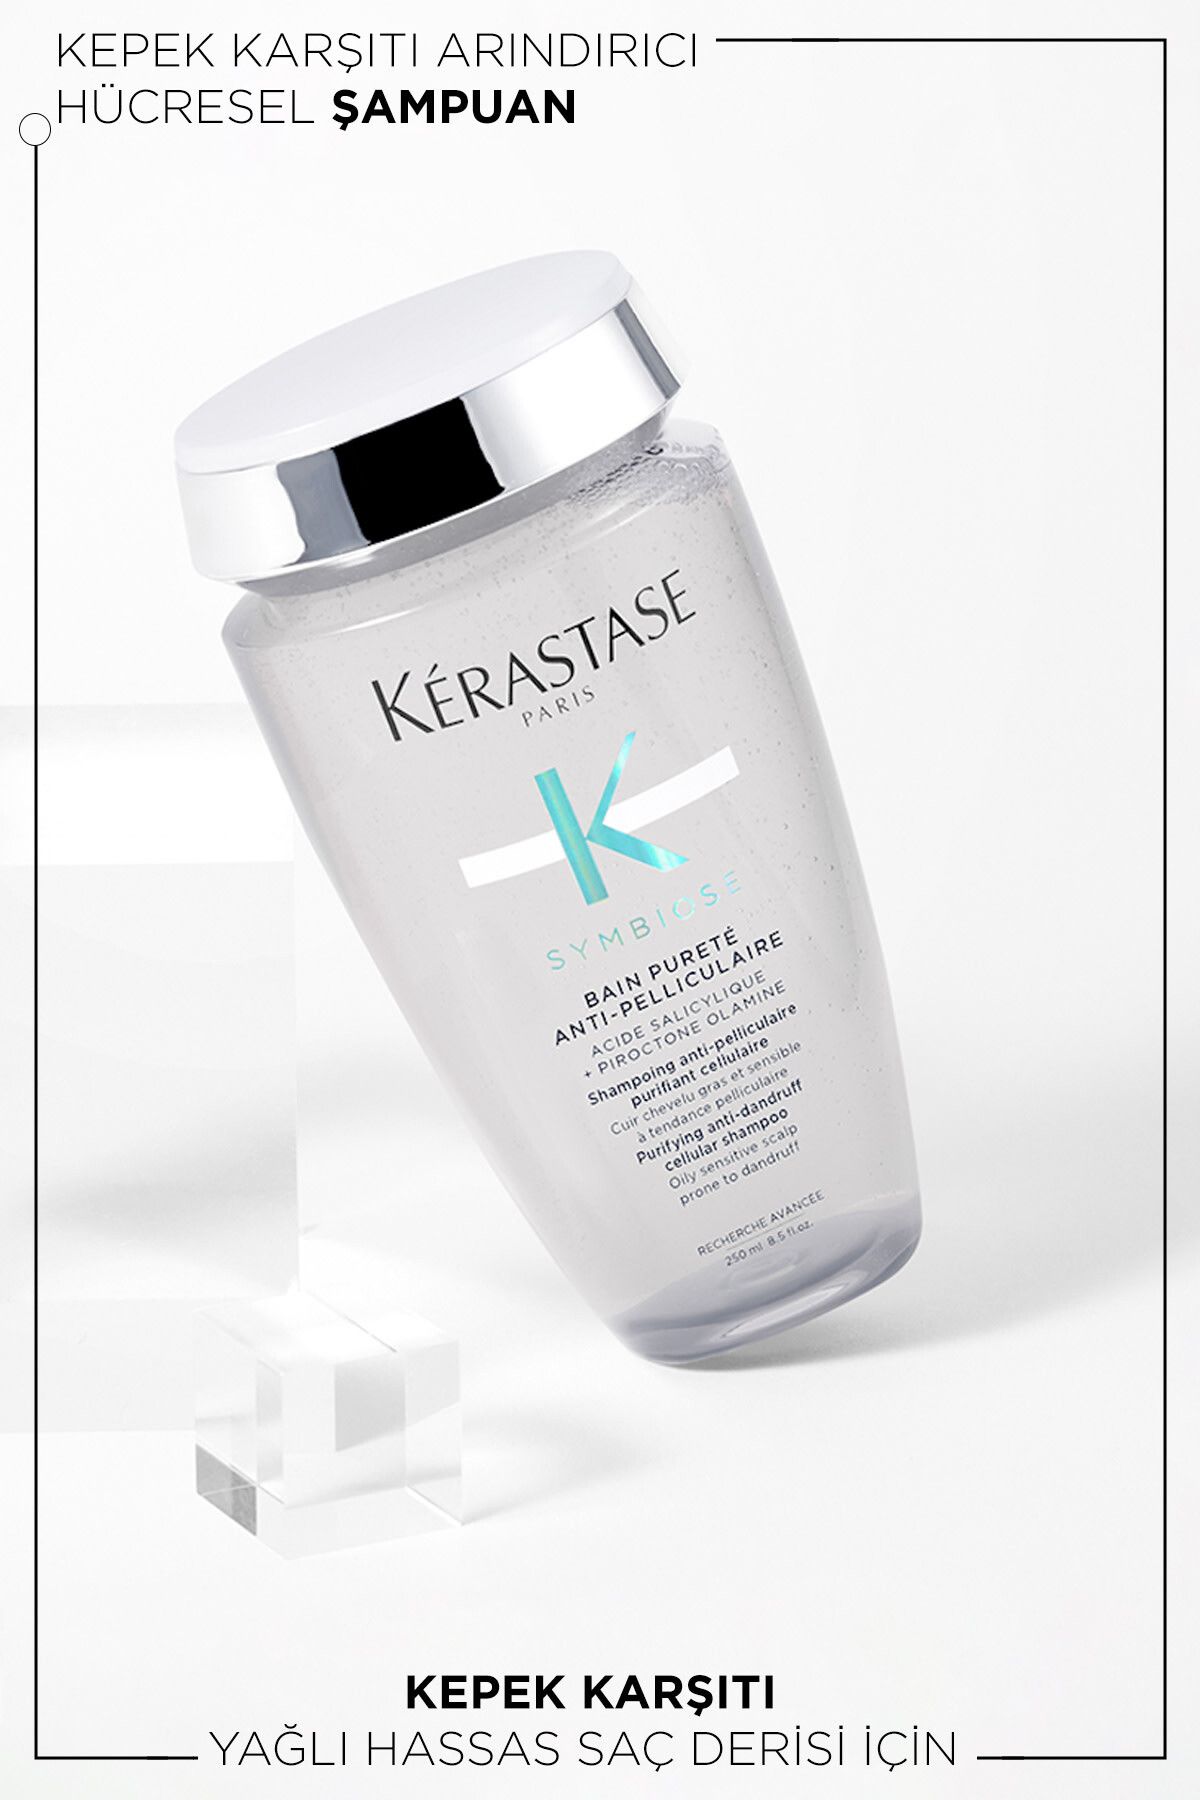 Kerastase مجموعه مراقبت از موی چرب SymbioSe برای جلوگیری از قشره